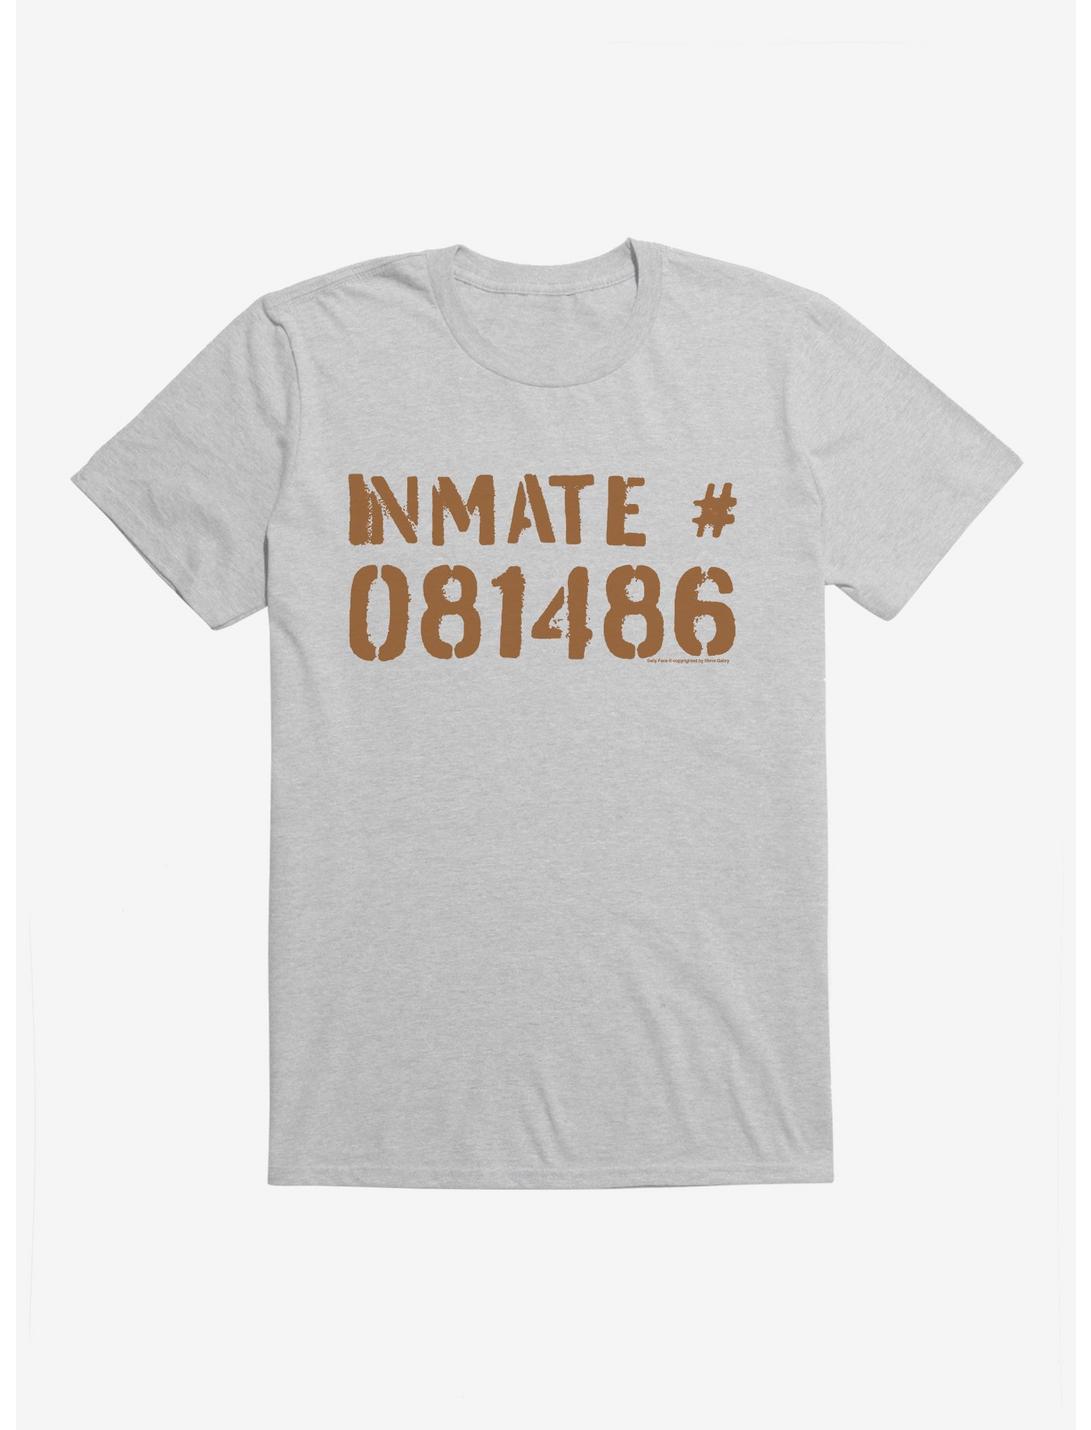 Sally Face Inmate 081486 T-Shirt, HEATHER GREY, hi-res